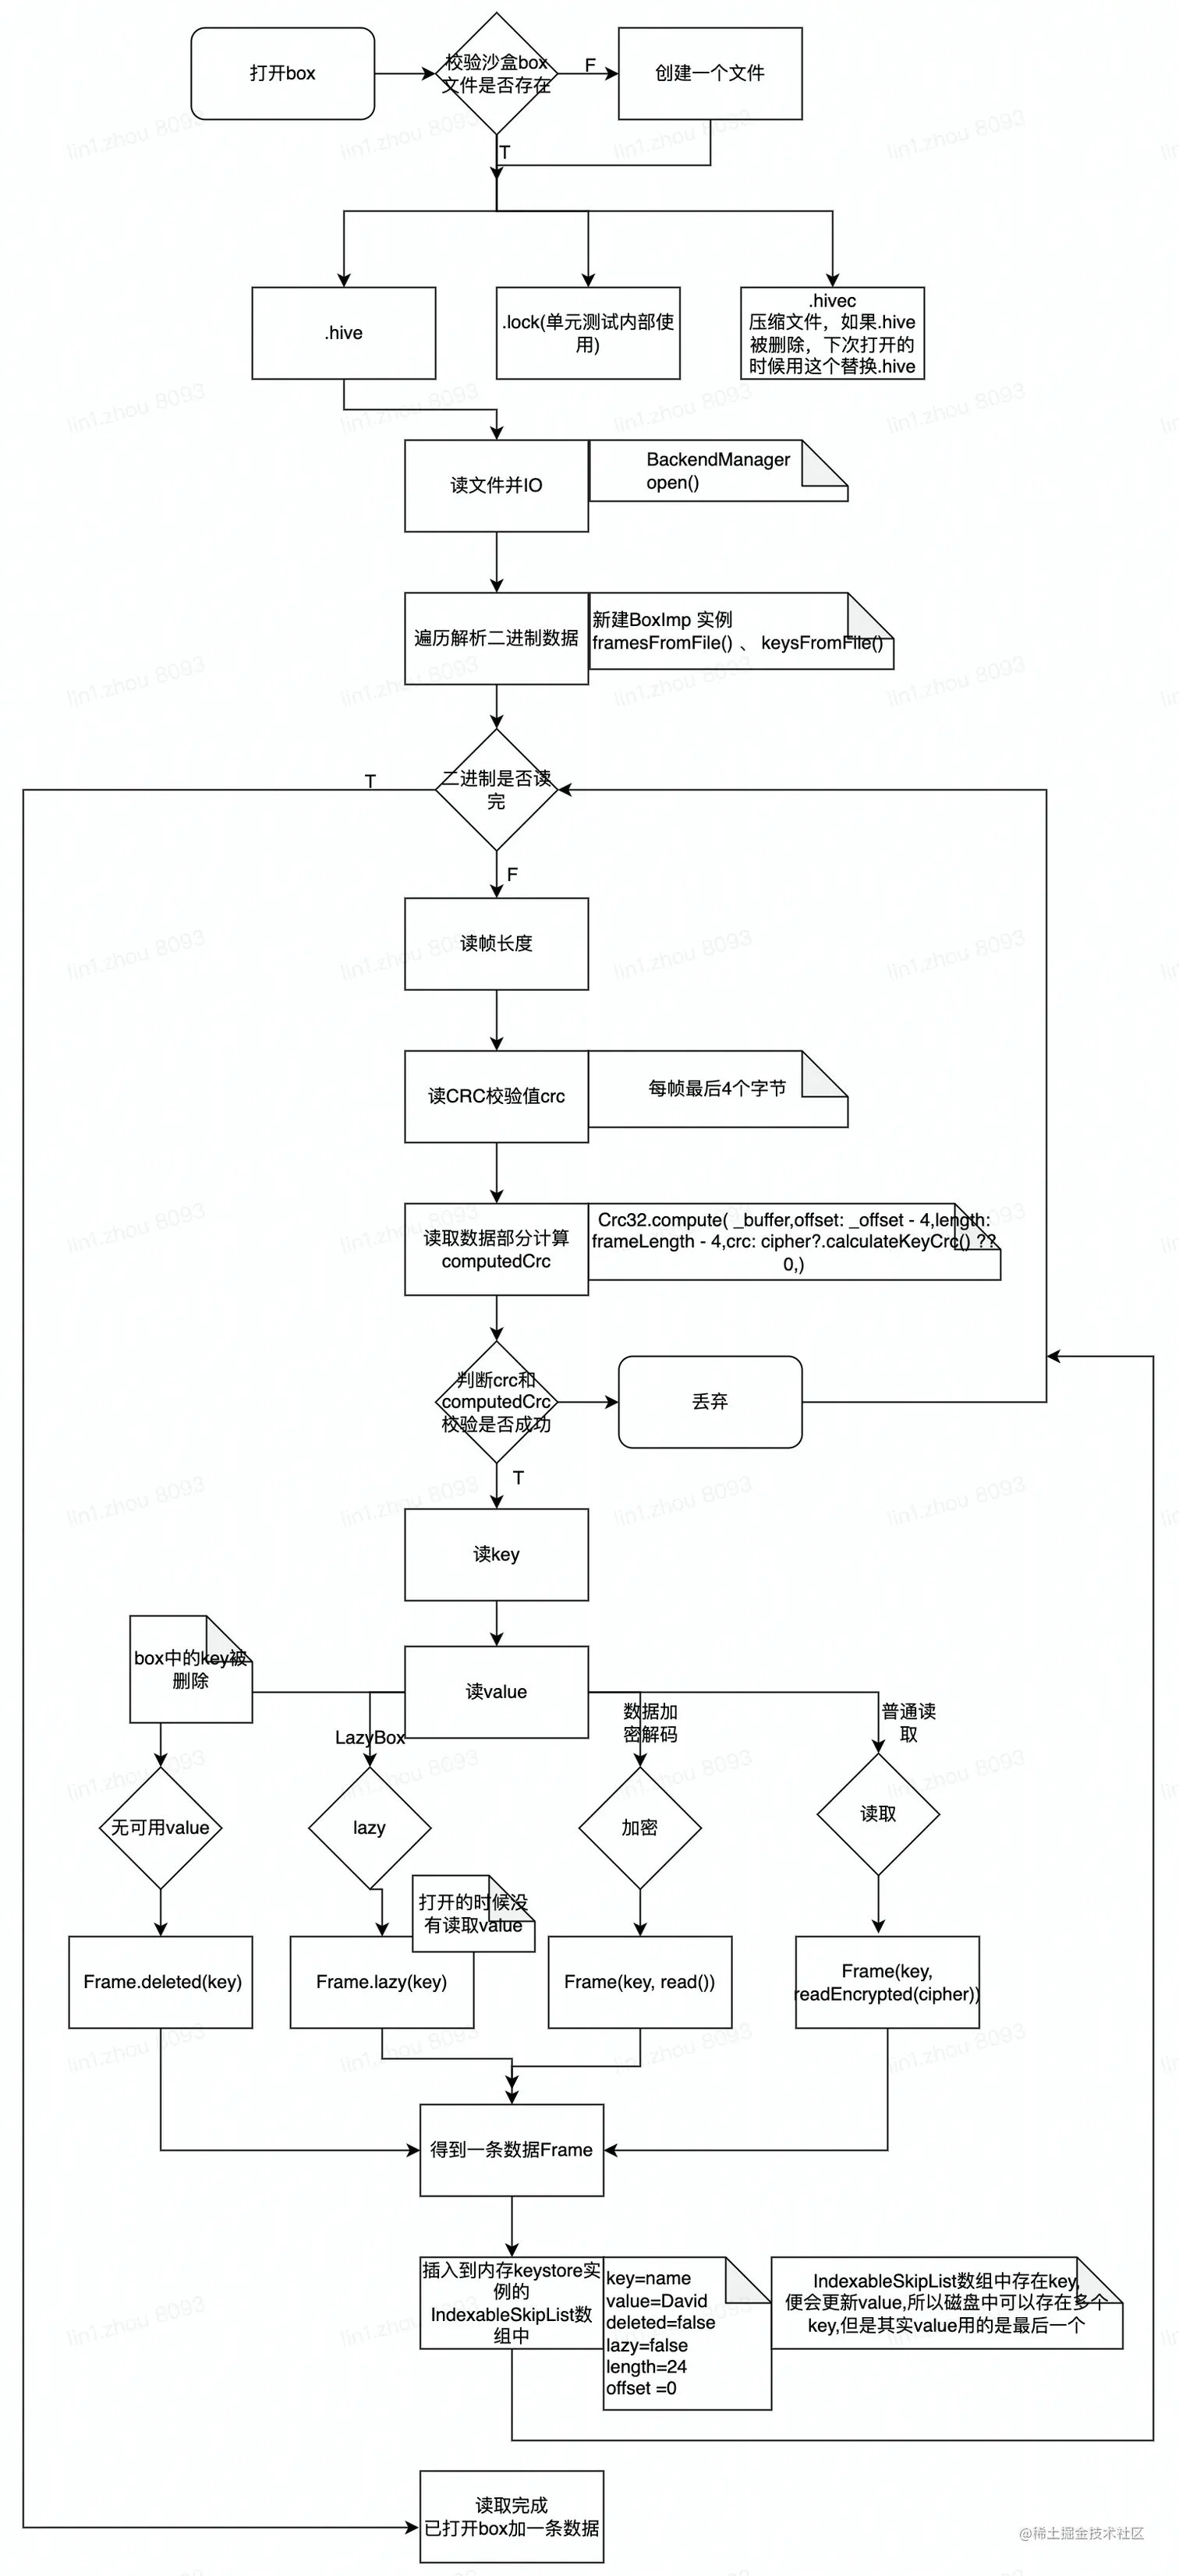 UML diagram (2).jpg